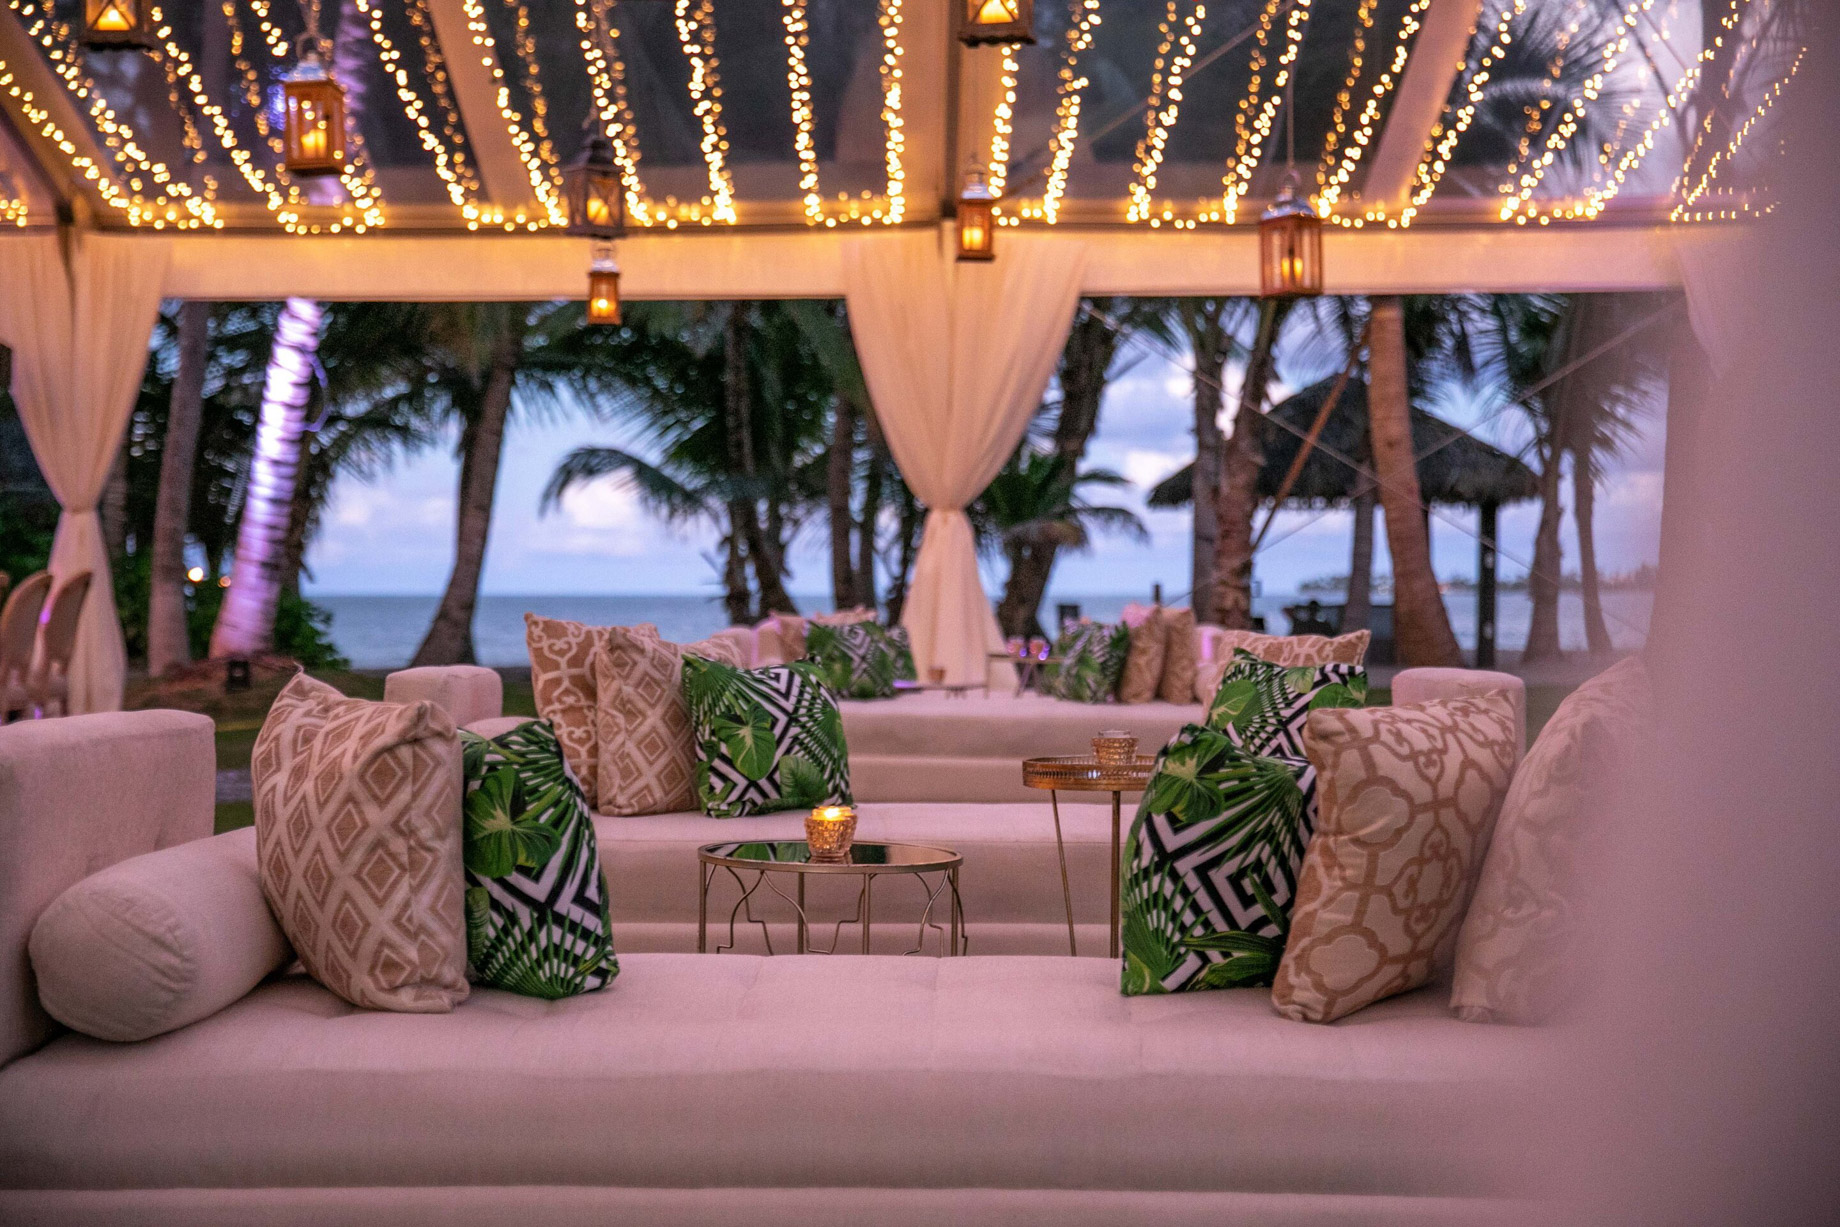 The St. Regis Bahia Beach Resort – Rio Grande, Puerto Rico – Seabreeze Event Lawn Setup